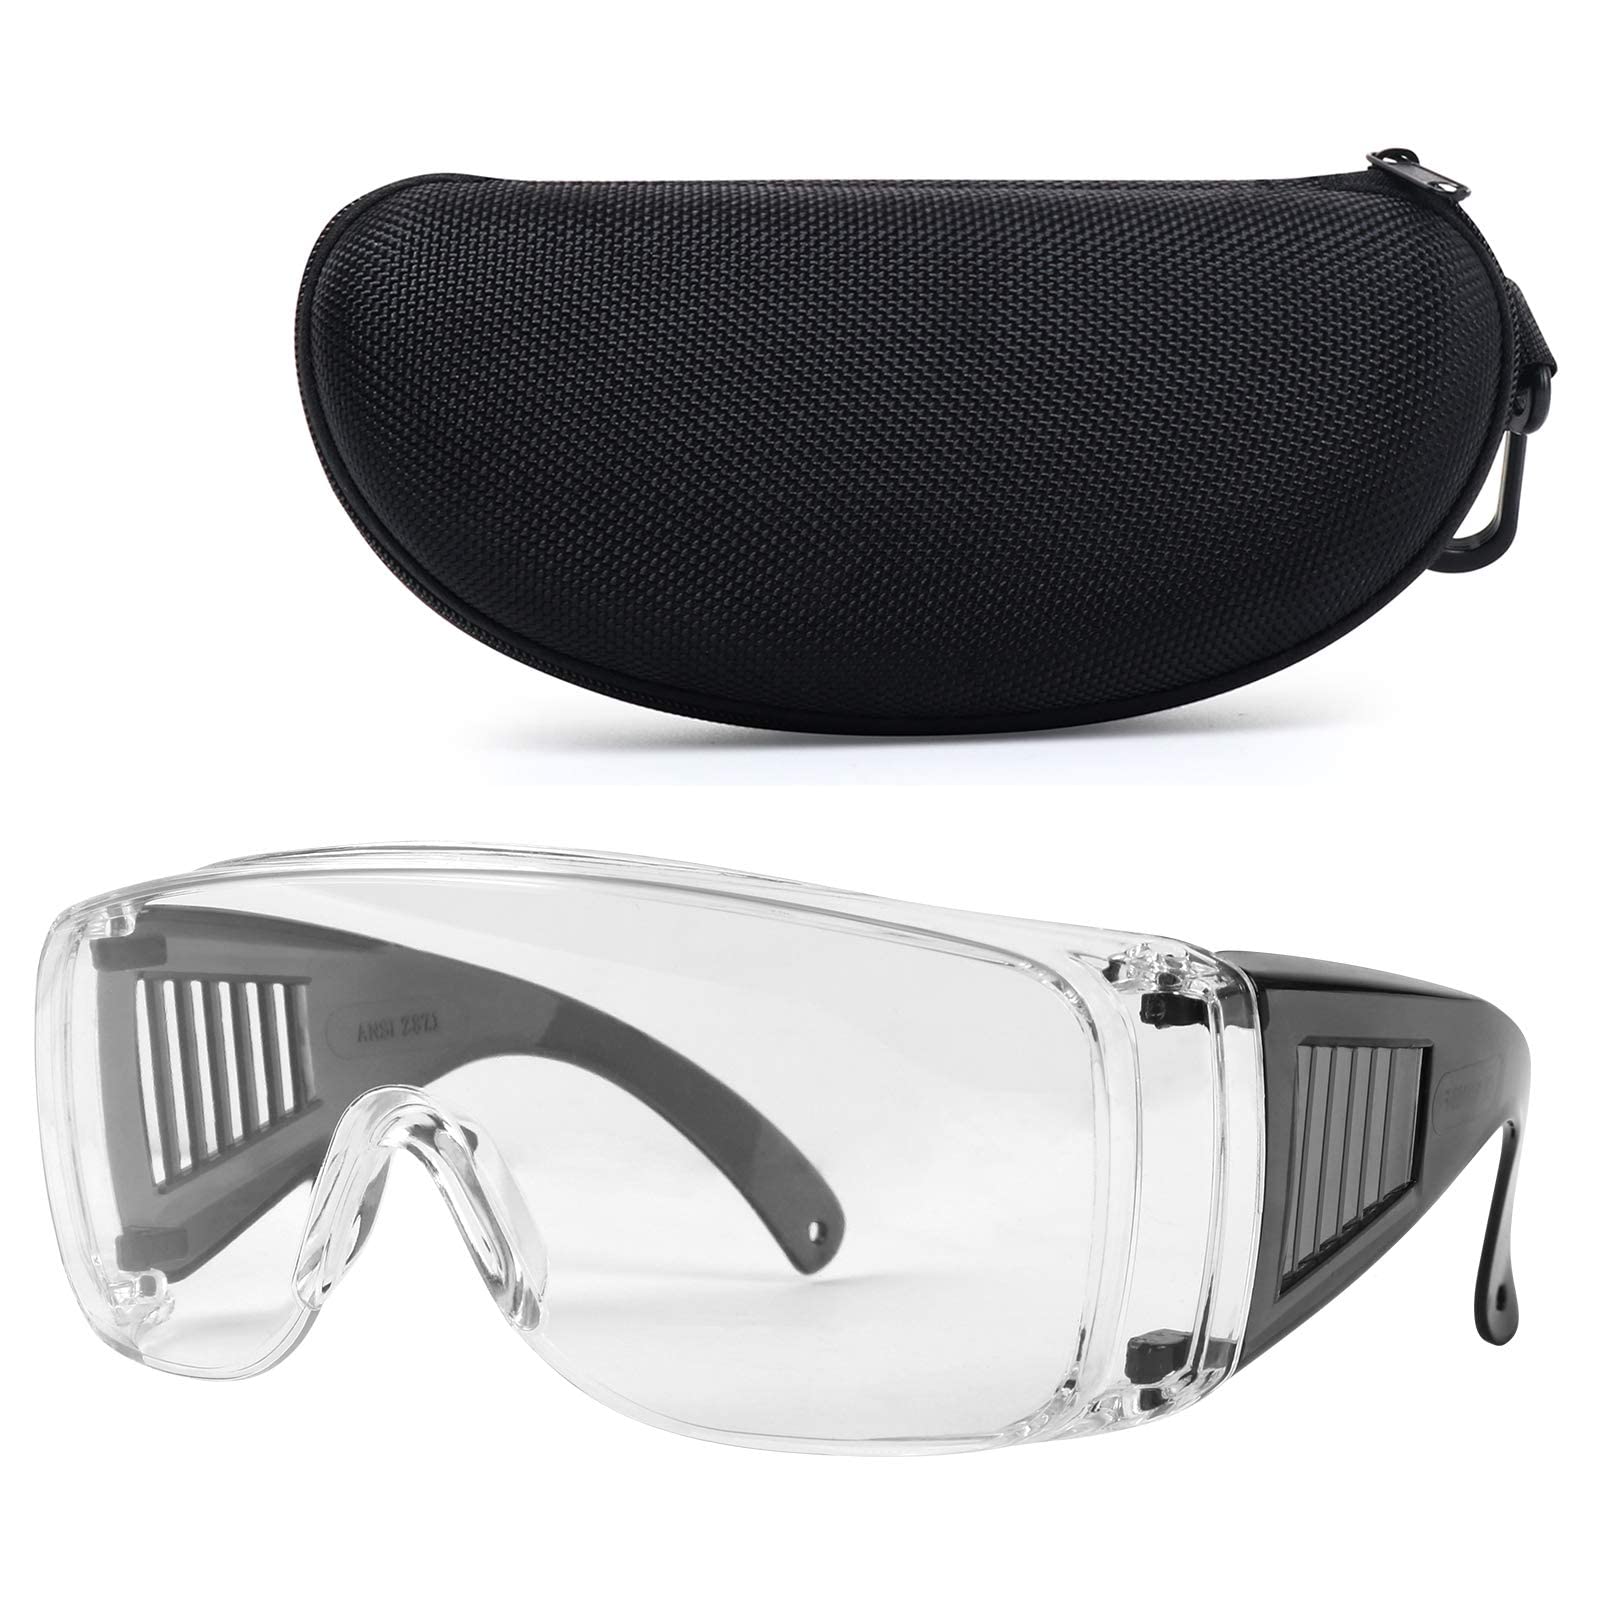 LaneTop Shooting Glasses Over Eyeglasses, Anti Fog Eye Protection For Shooting Range Over Prescription Safety Glasses With Hard Case Otg